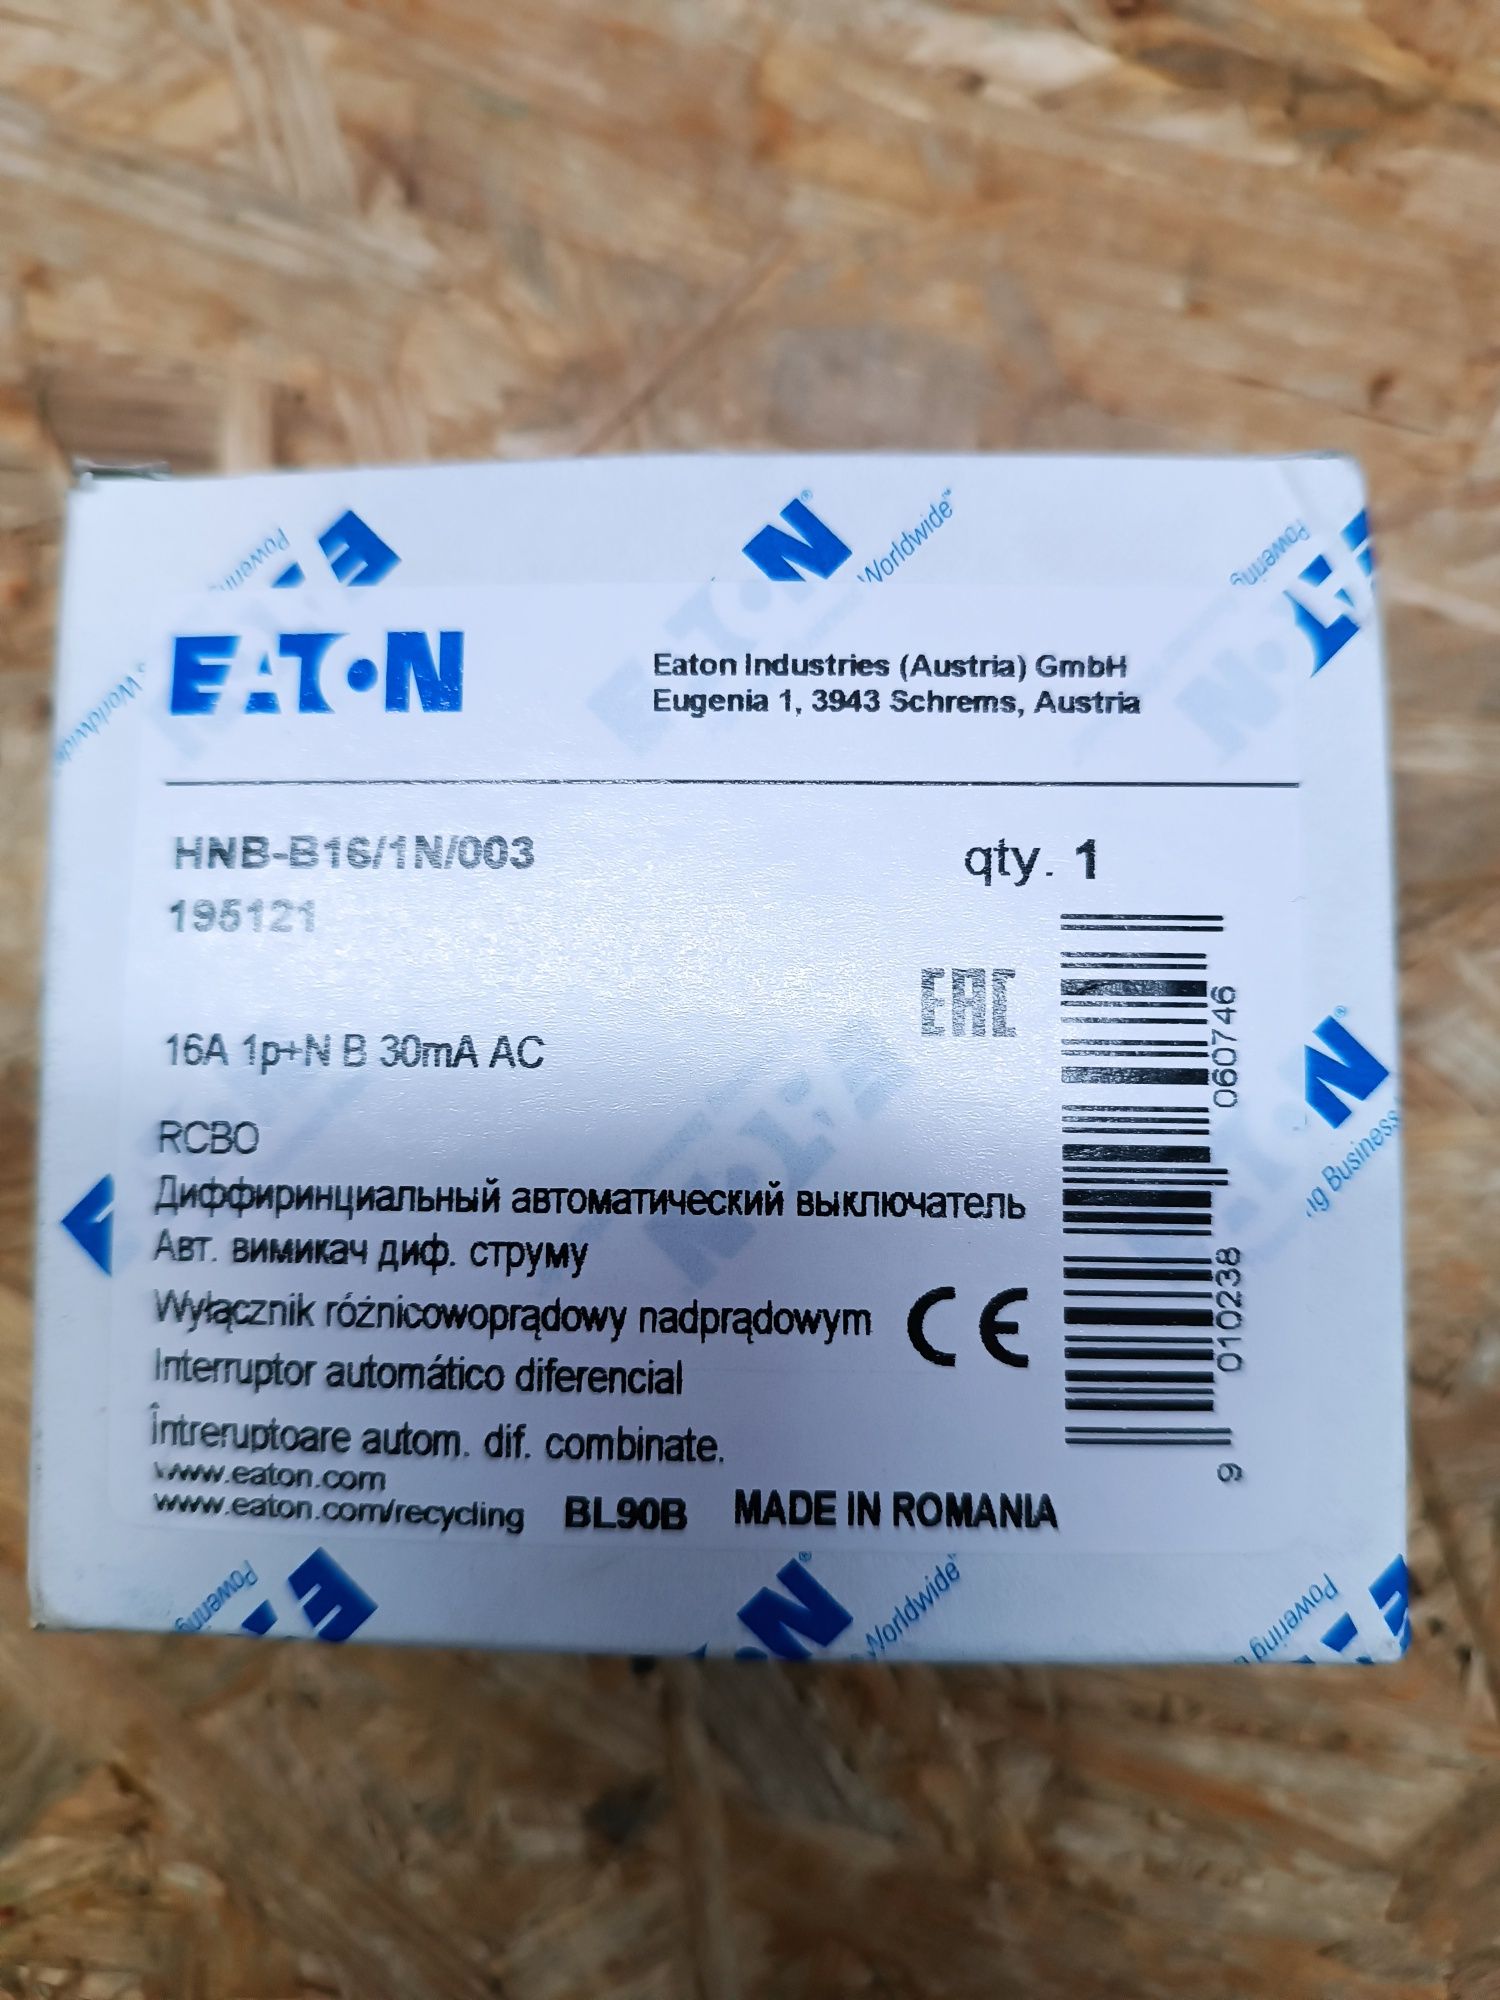 Eaton HNB-B16/1N/003 Róznicówka